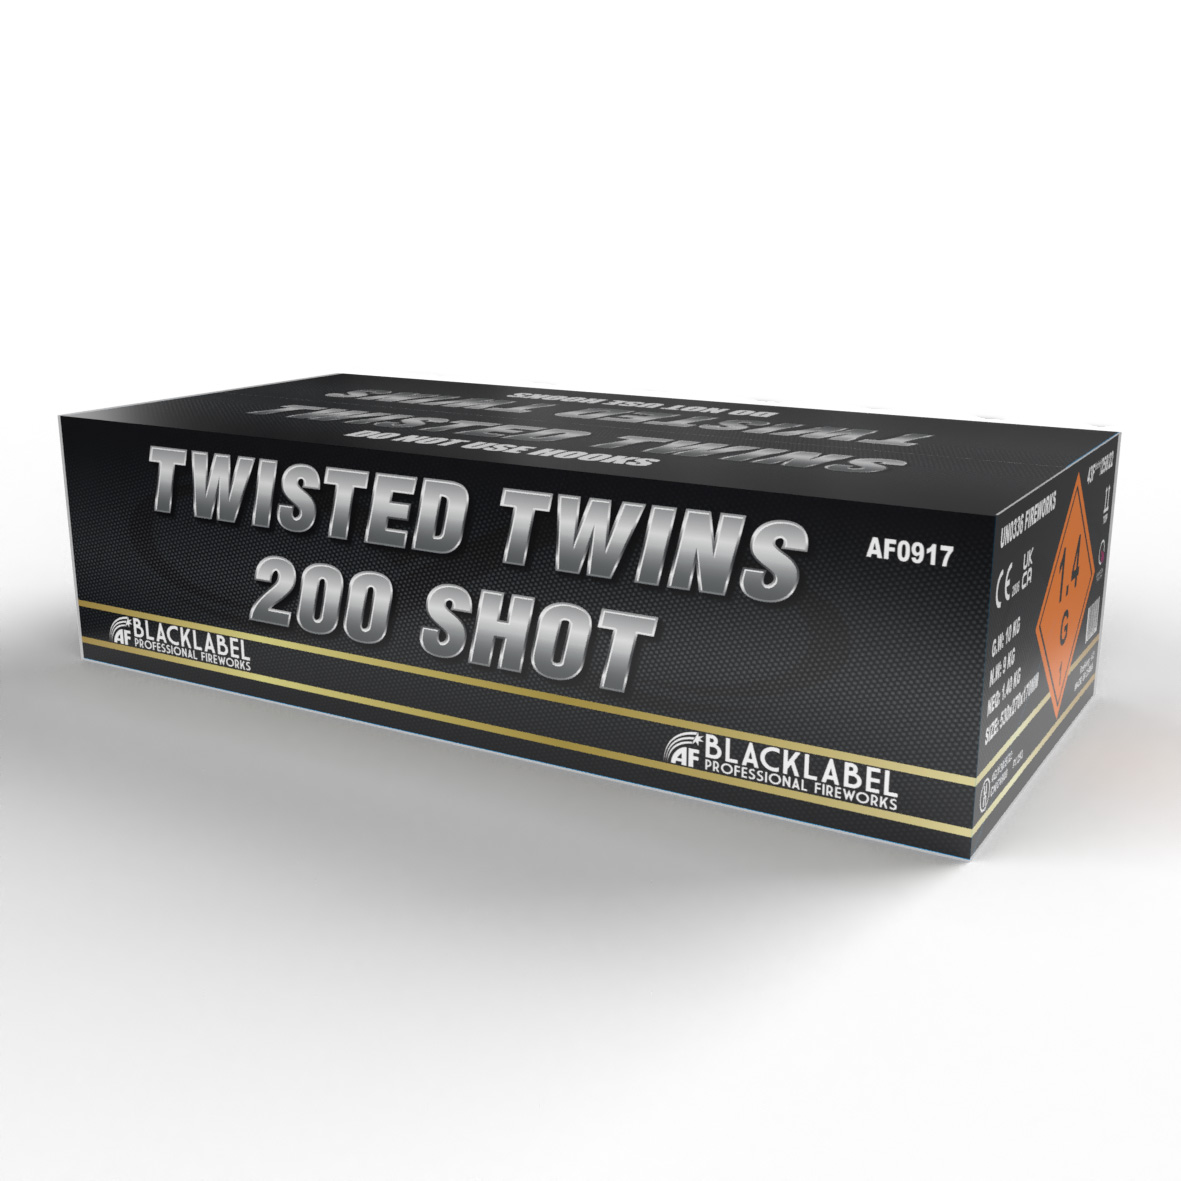 Twisted Twins 200 shots